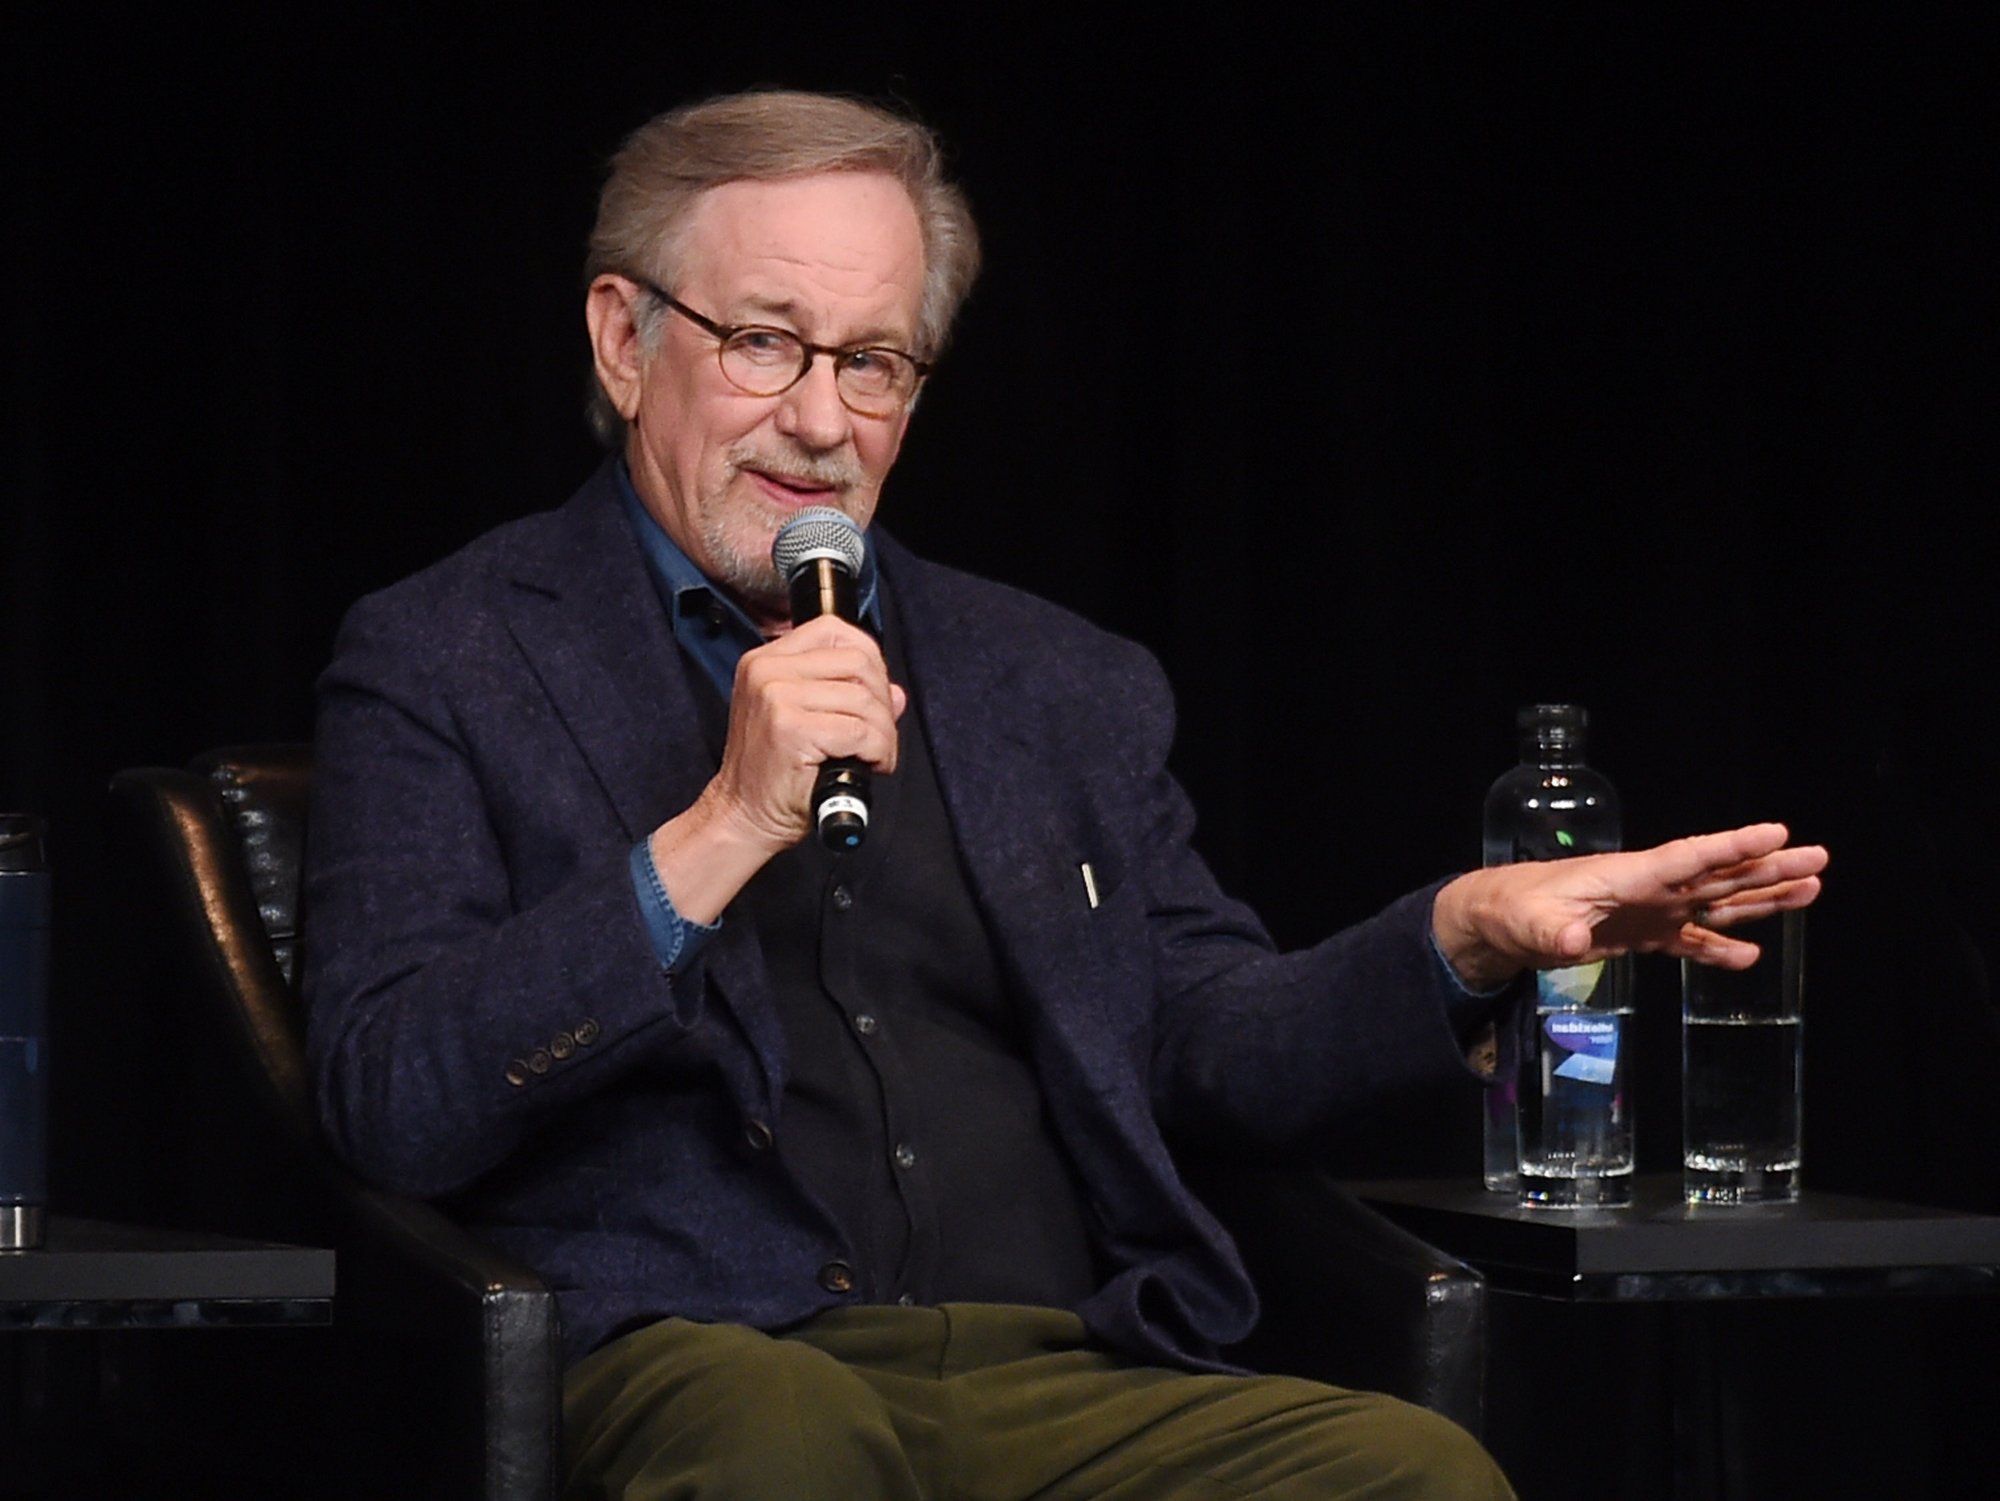 'Schindler's List' filmmaker Steven Spielberg speaking into a microphone